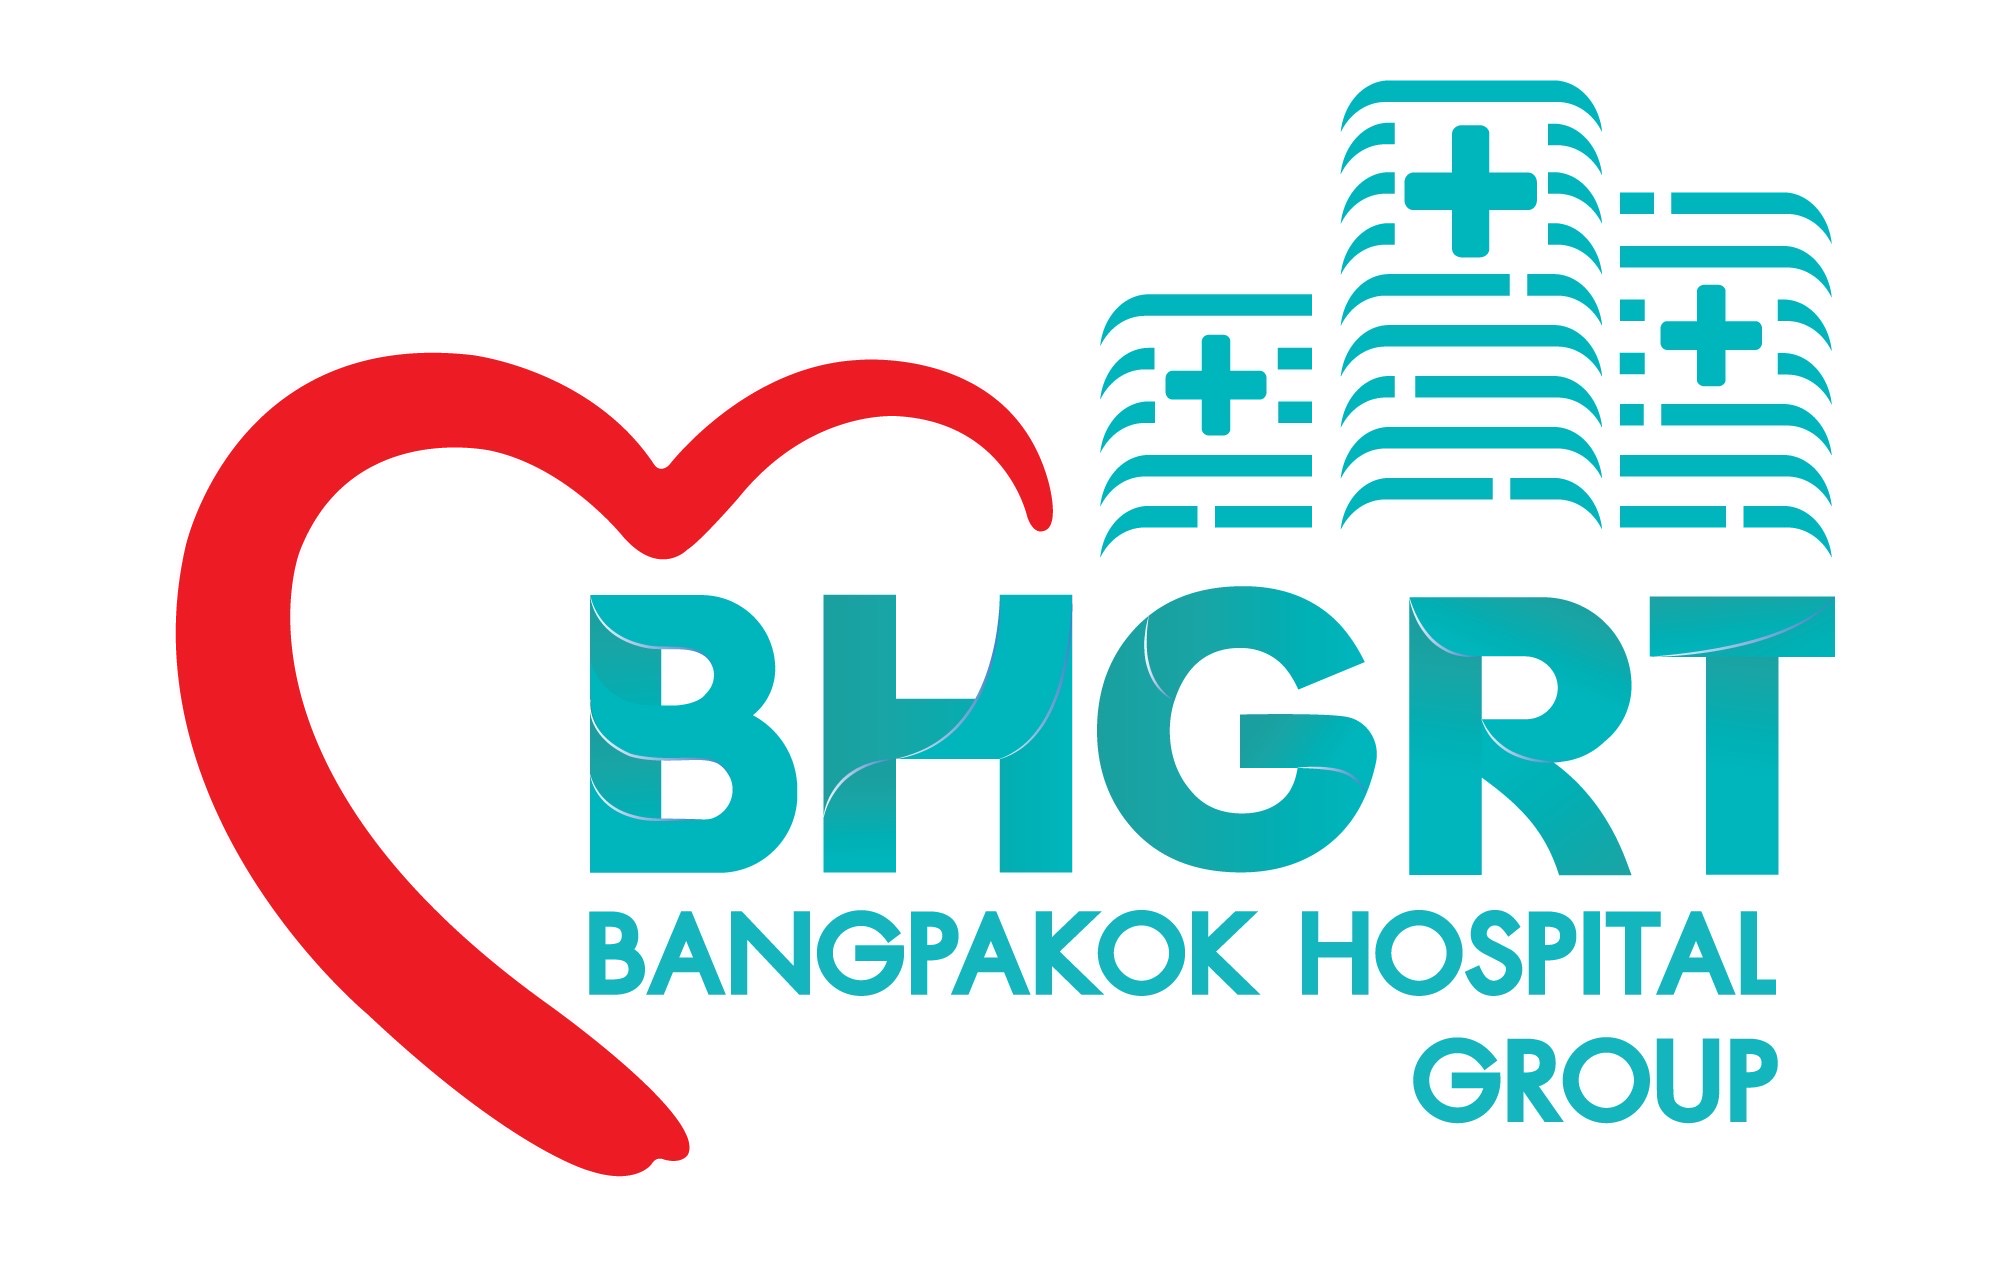 BHGRT ทรัสต์โรงพยาบาลกองแรกของไทย เครือรพ.บางปะกอก